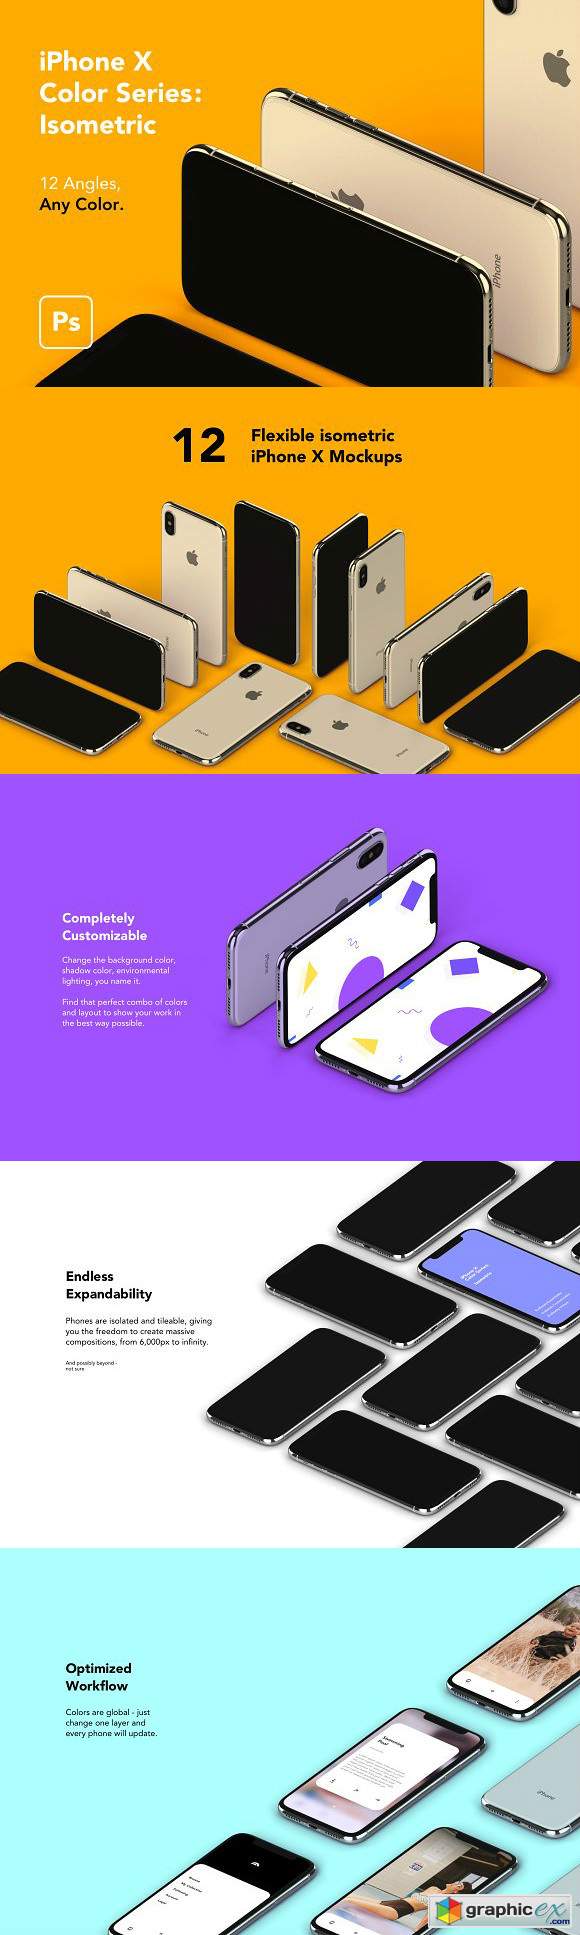 iPhone X Color Series - Isometric